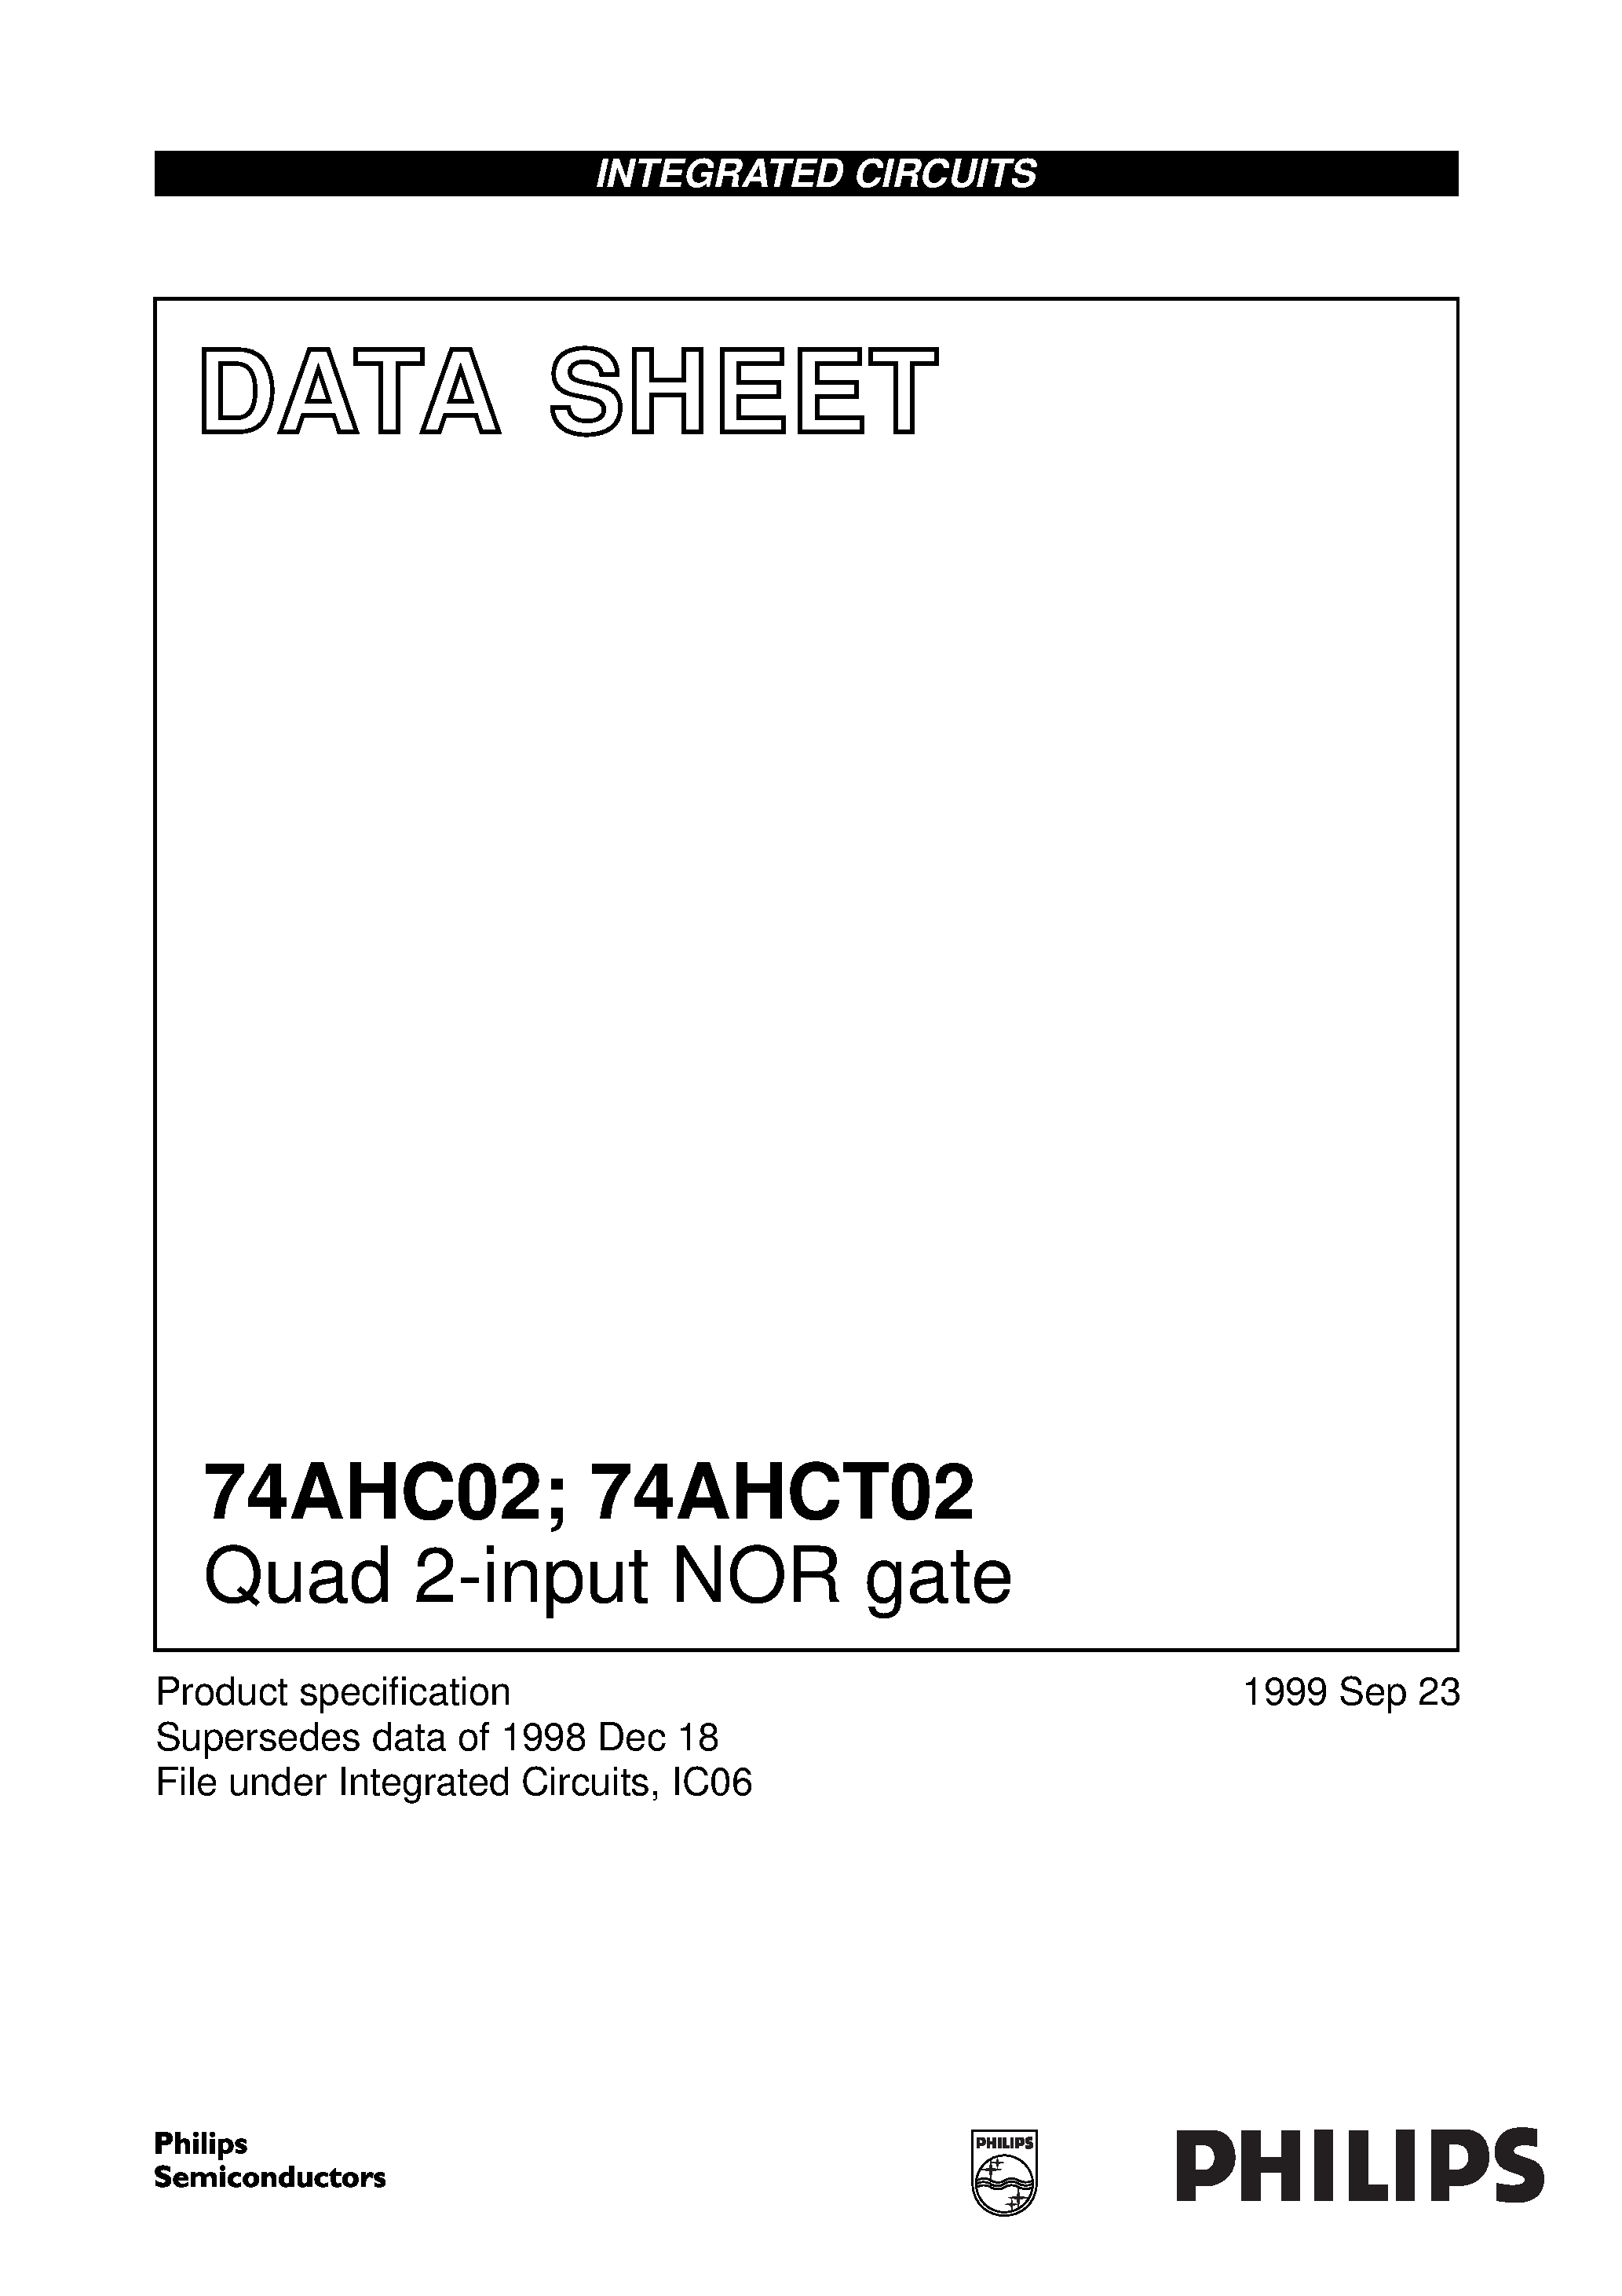 Datasheet 74AHC02PW - Quad 2-input NOR gate page 1